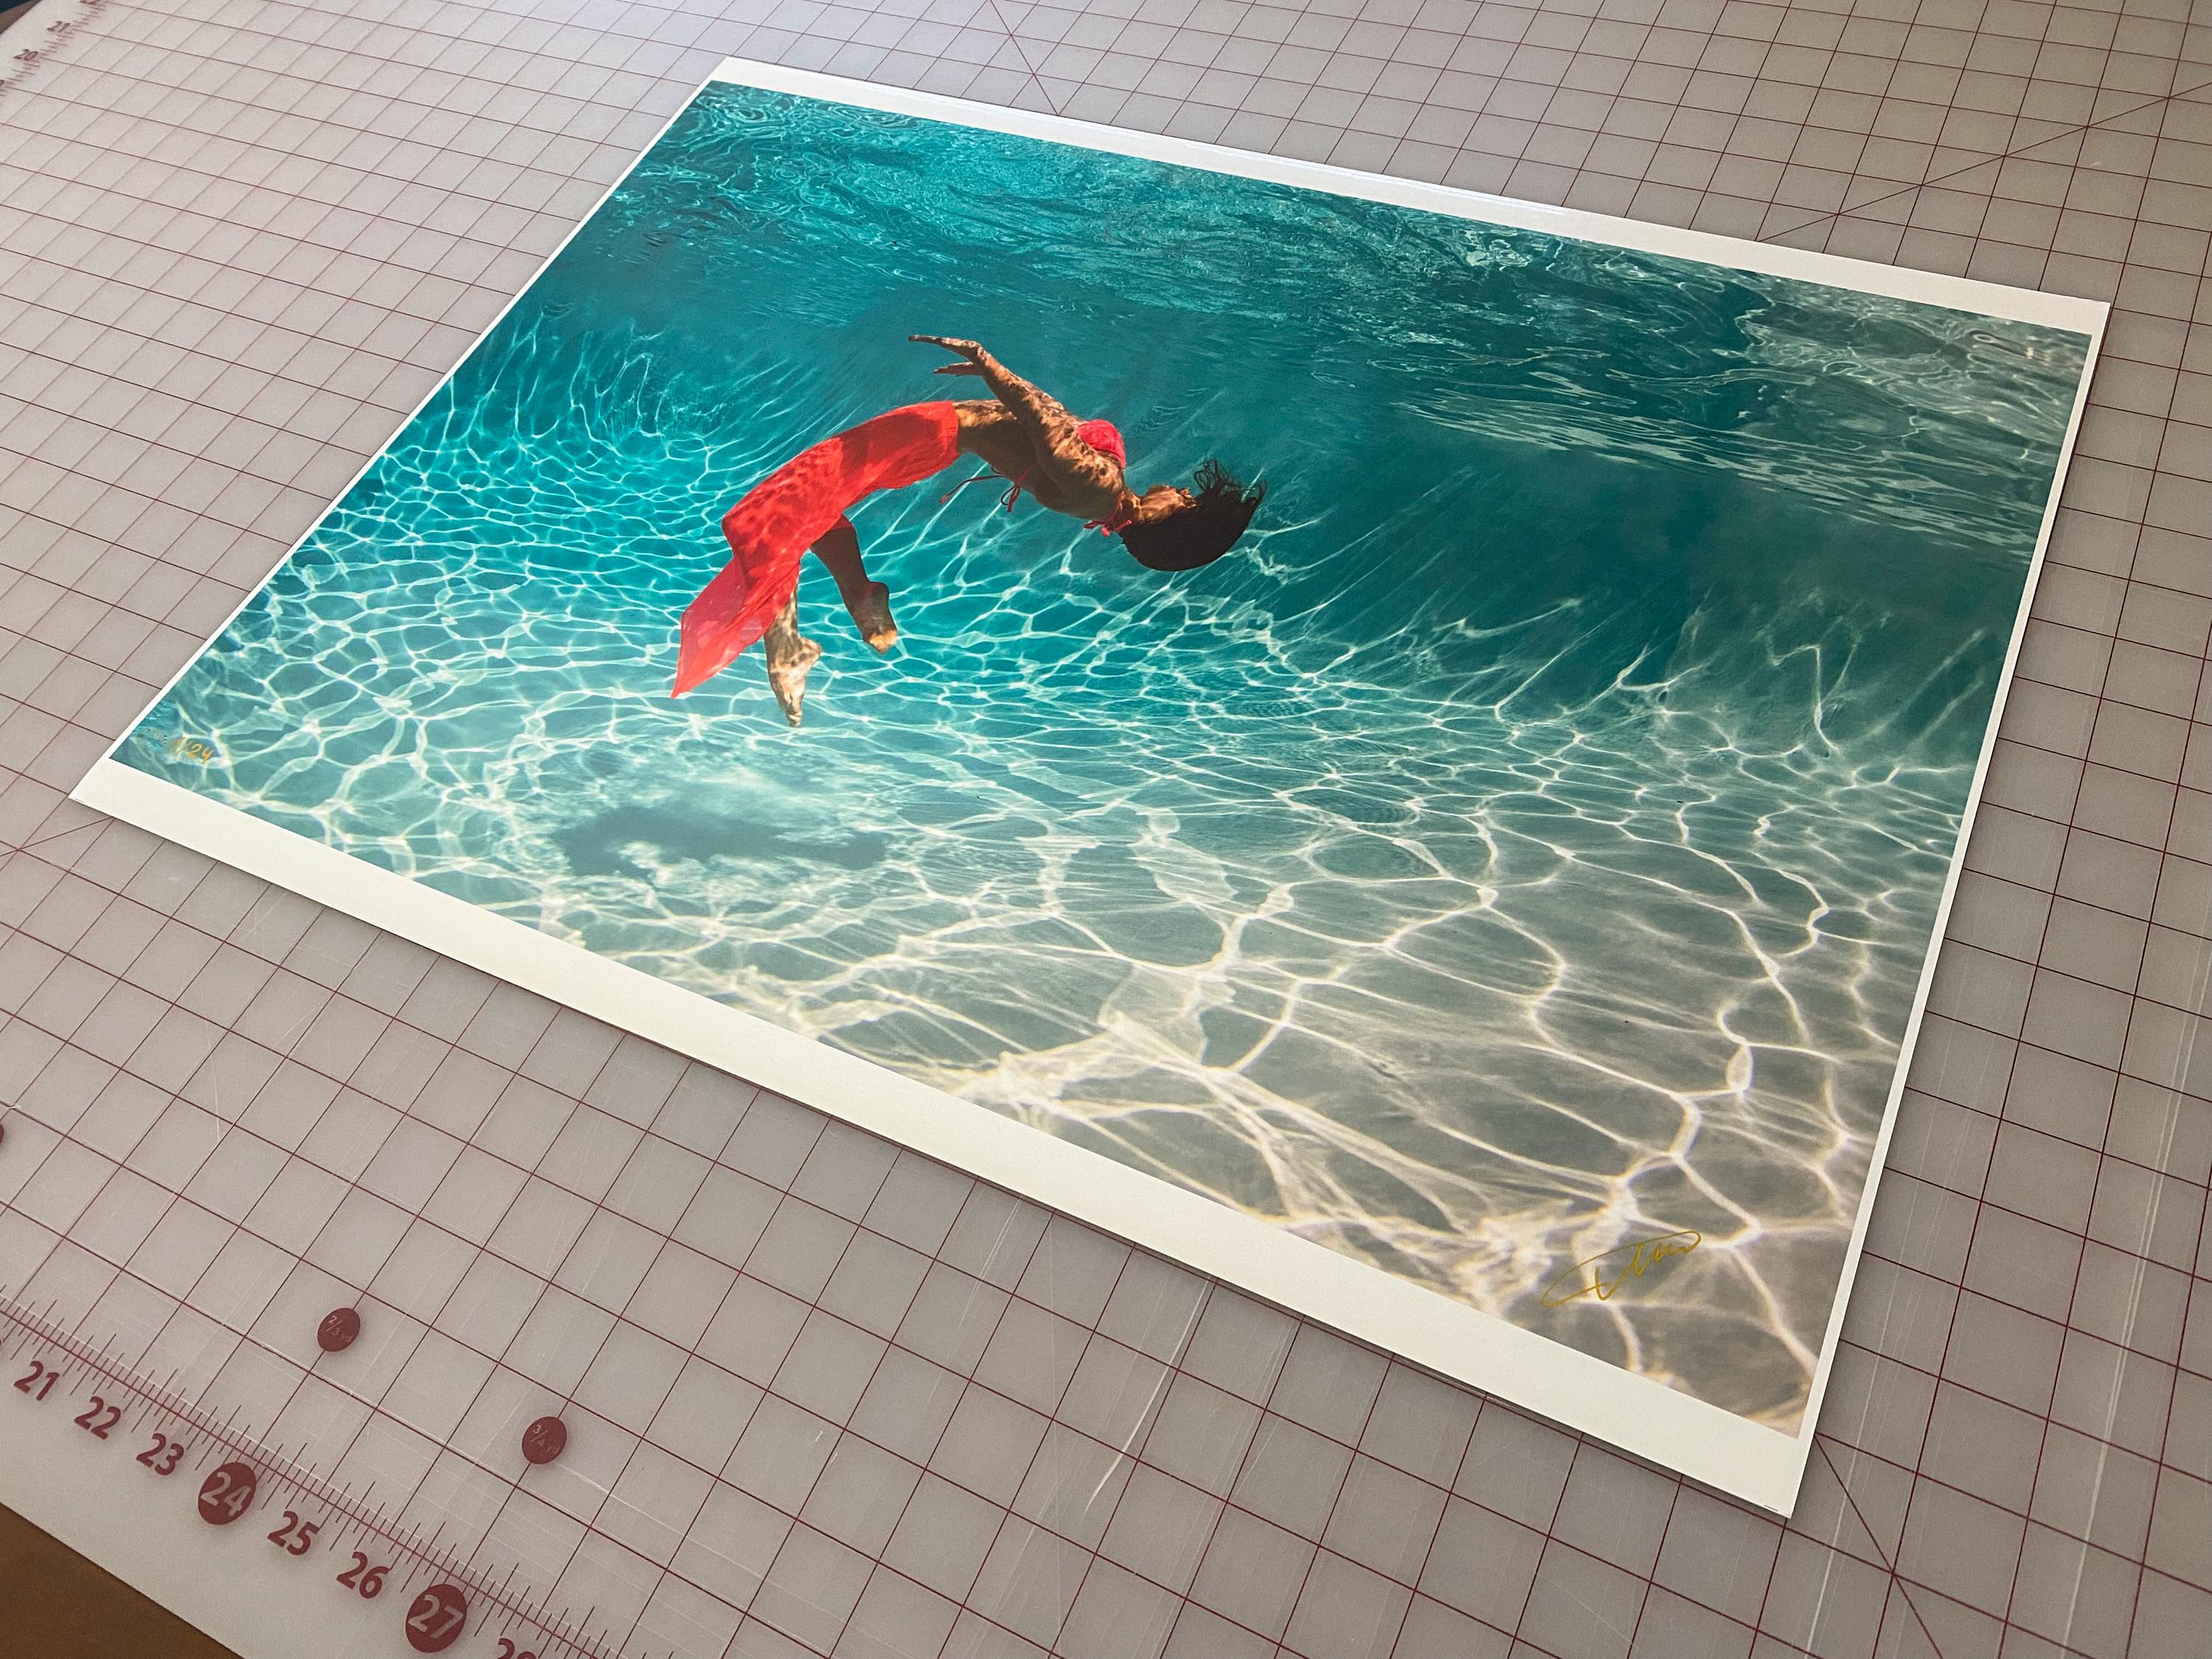 Flurry - underwater photograph - archival pigment print 18